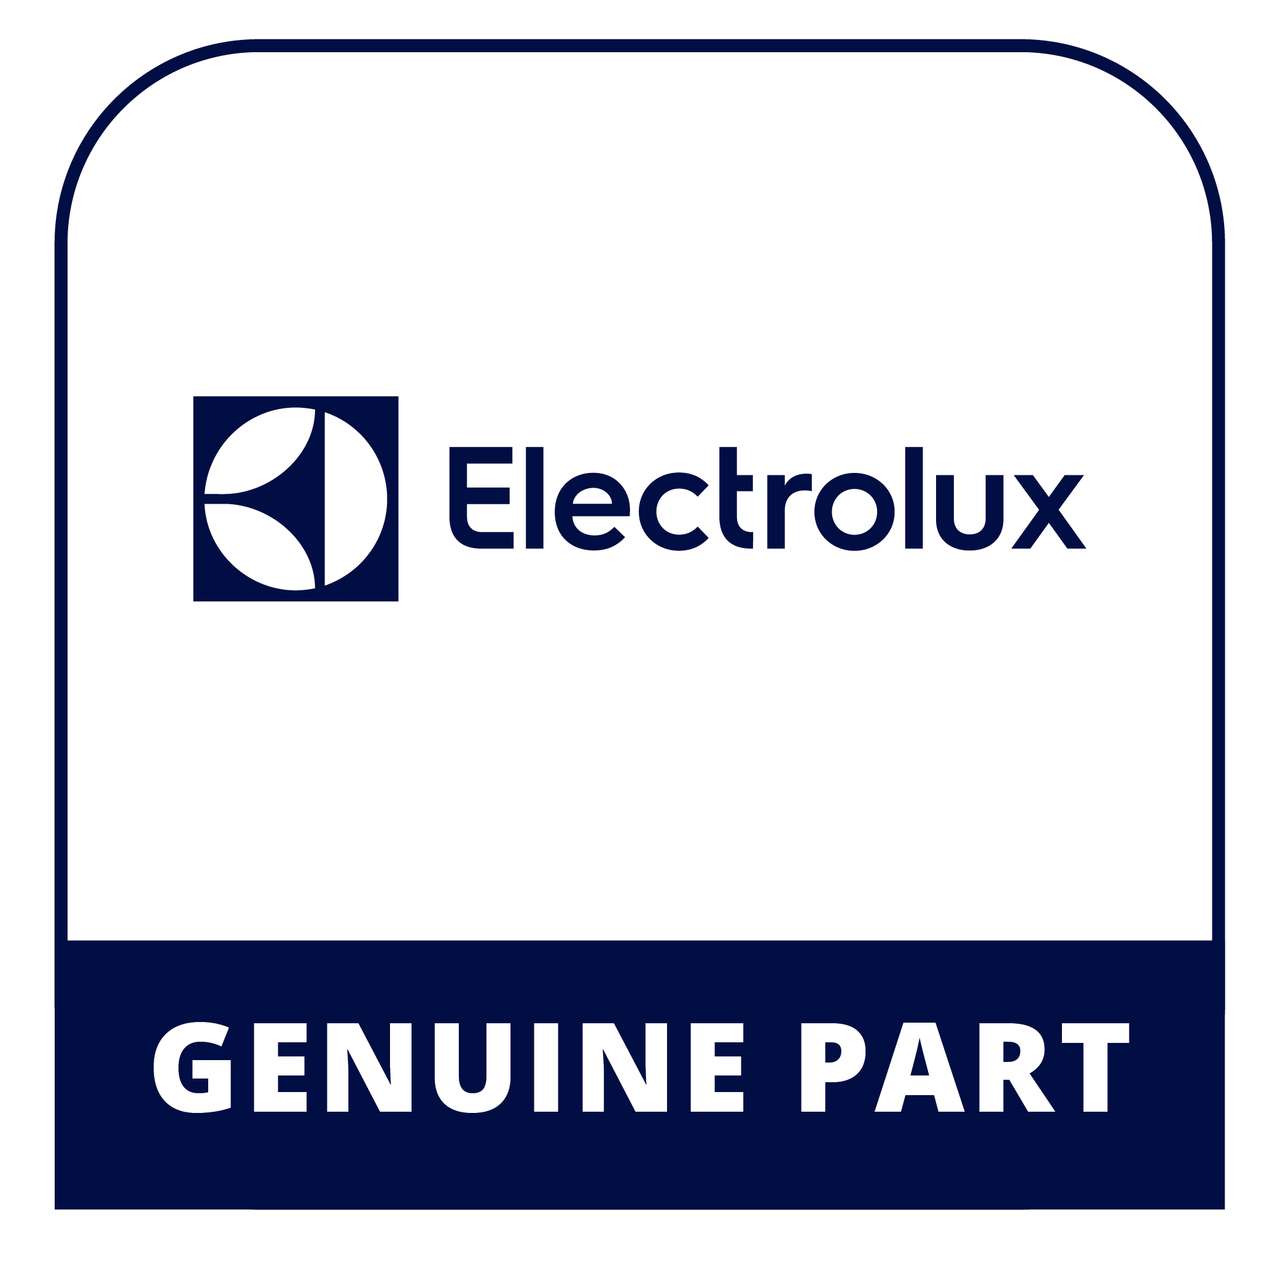 Frigidaire - Electrolux 134934900 Gasket - Genuine Electrolux Part